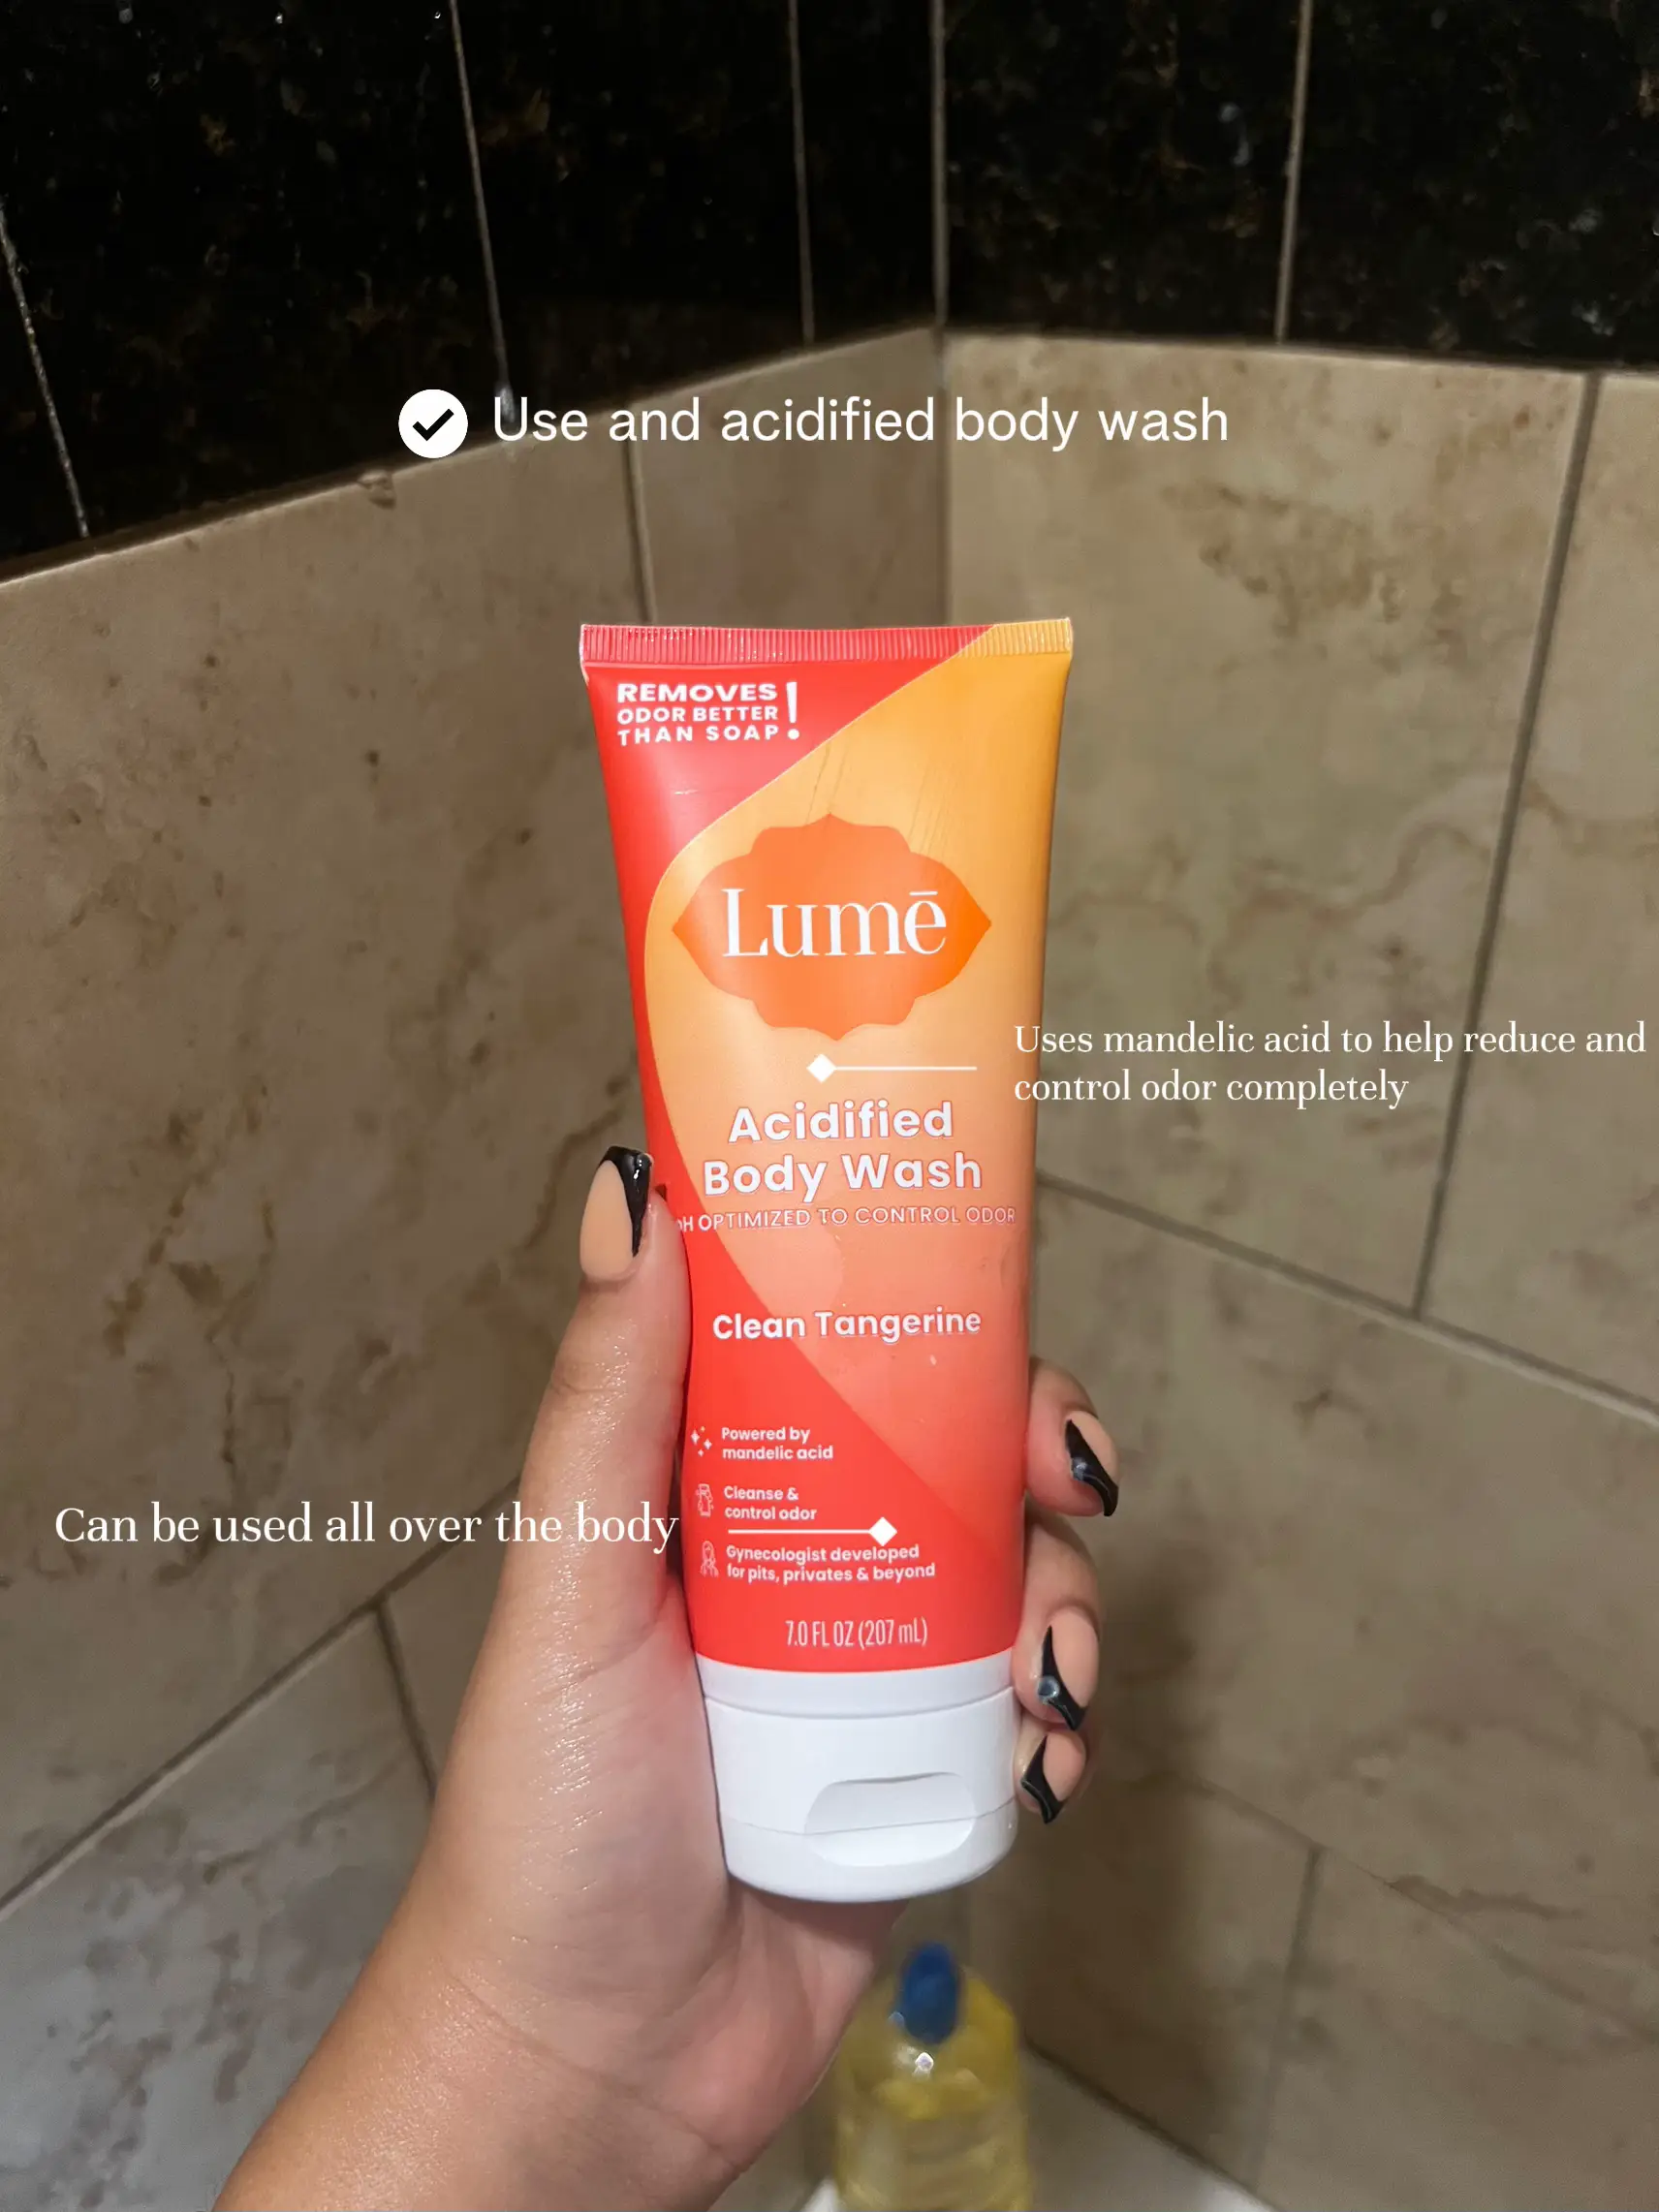 Clean Tangerine, Acidified Body Wash